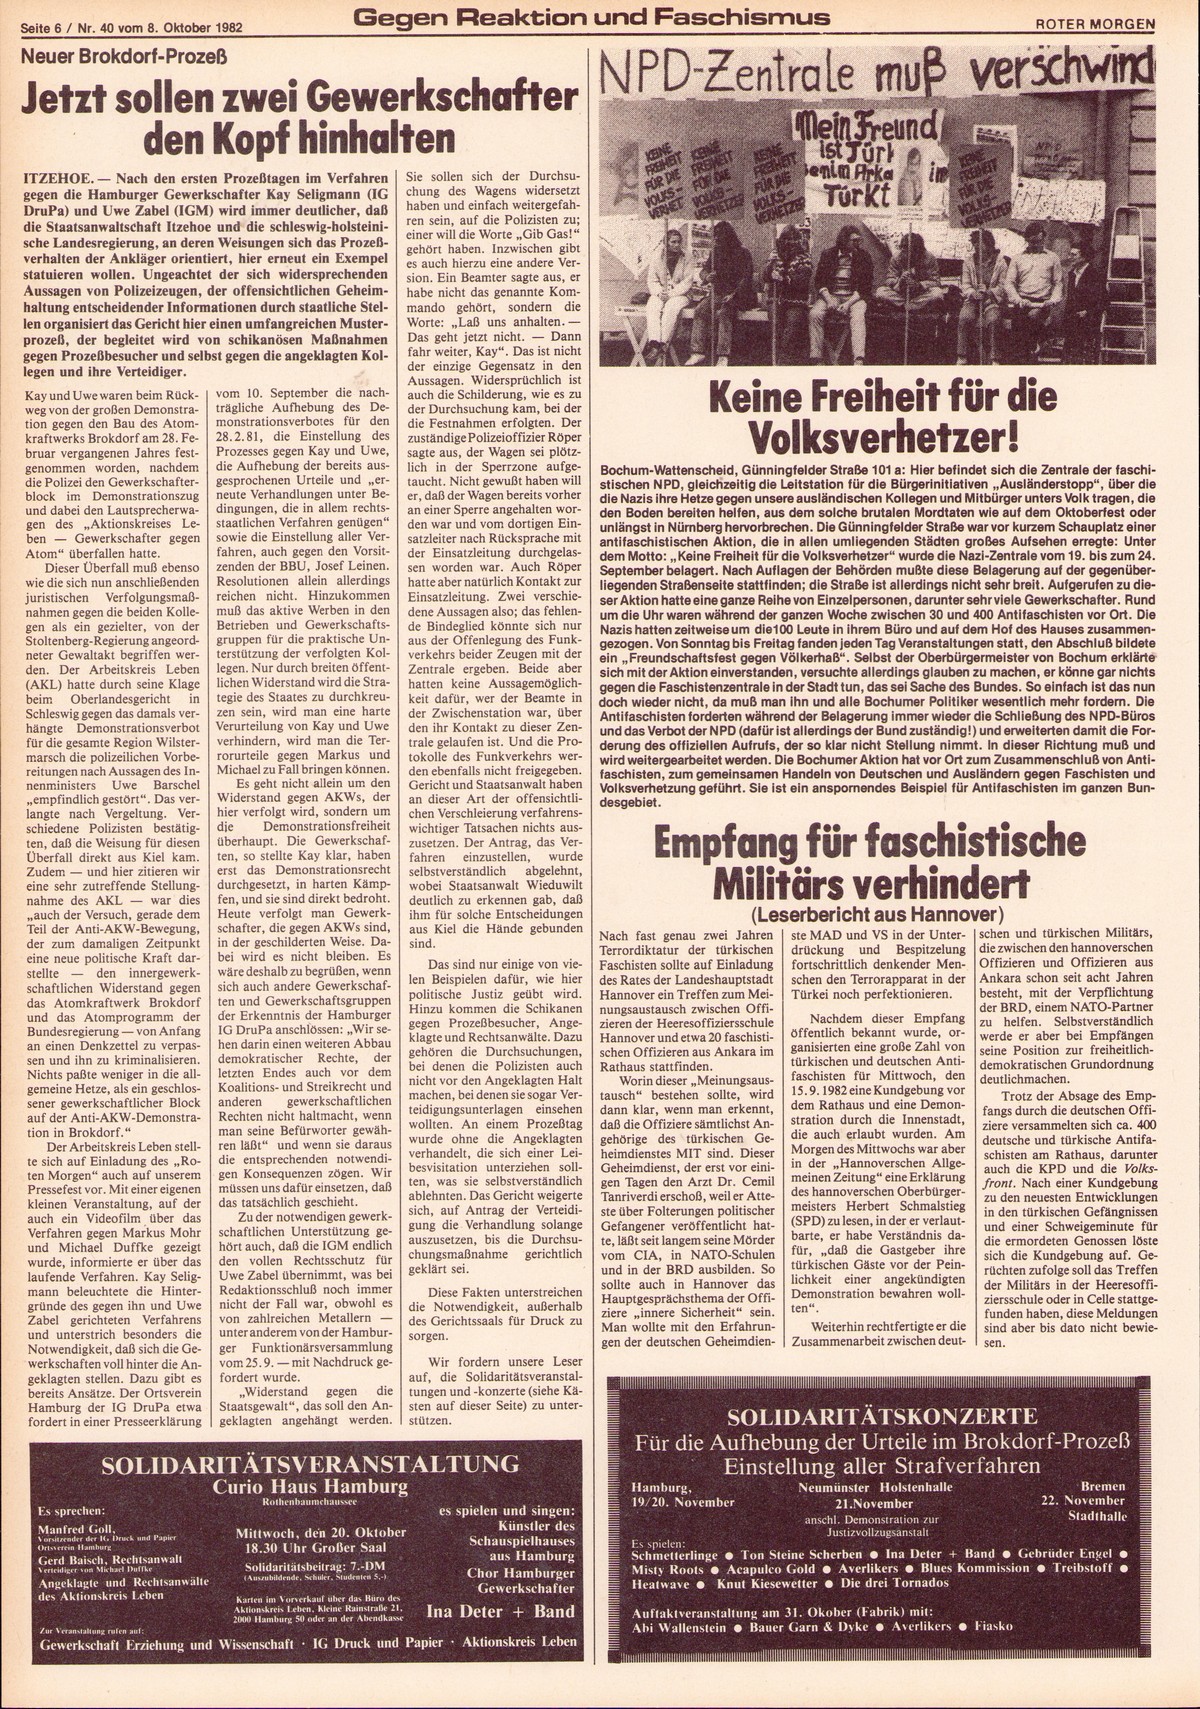 Roter Morgen, 16. Jg., 8. Oktober 1982, Nr. 40, Seite 6